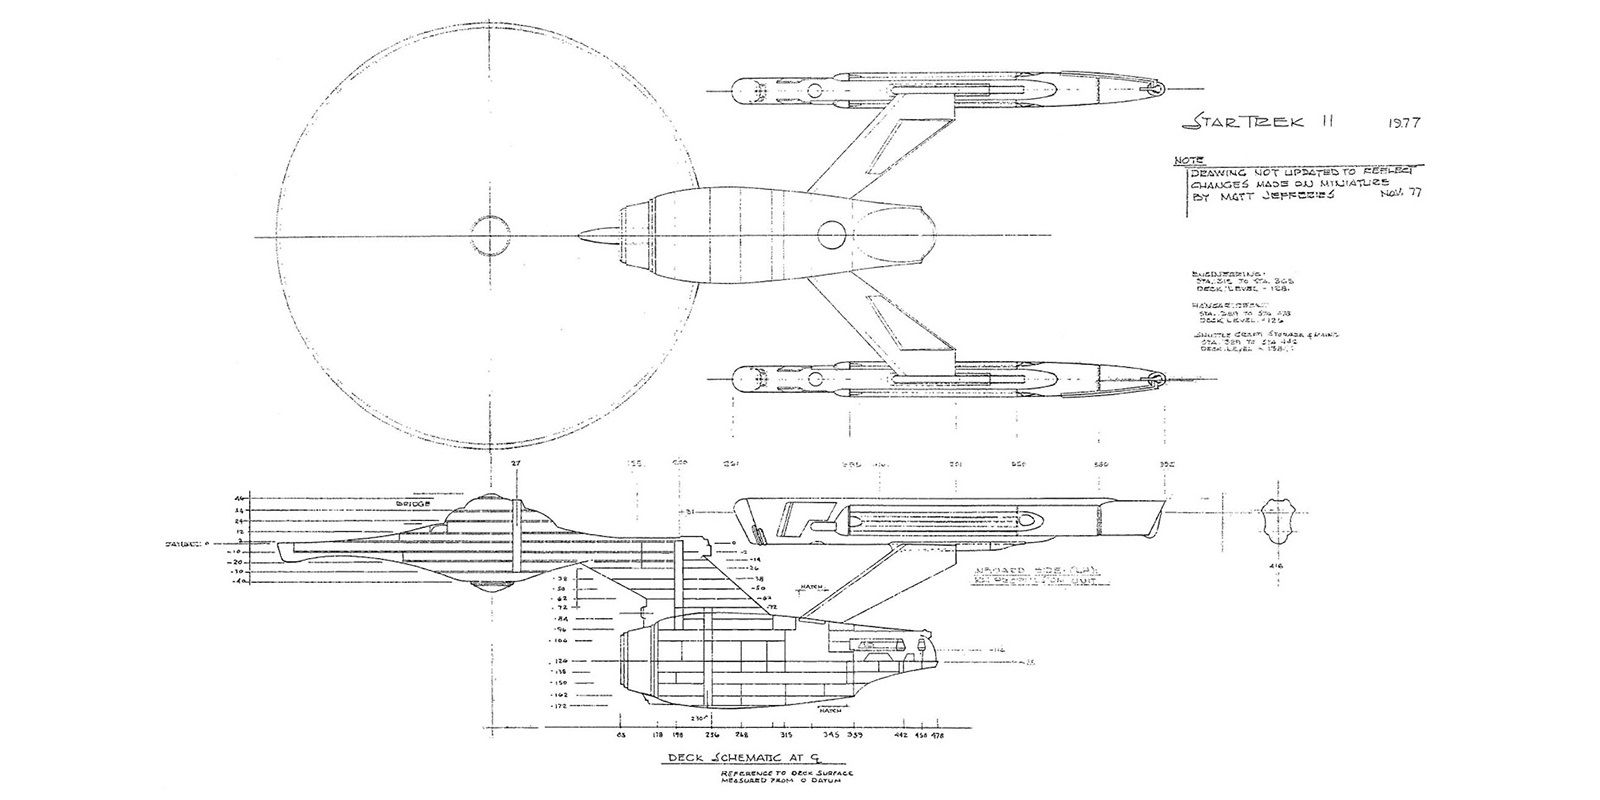 The Joe Jennings or Matt Jefferies sketch of the Enterprise form Star Trek Phase II via Paramount